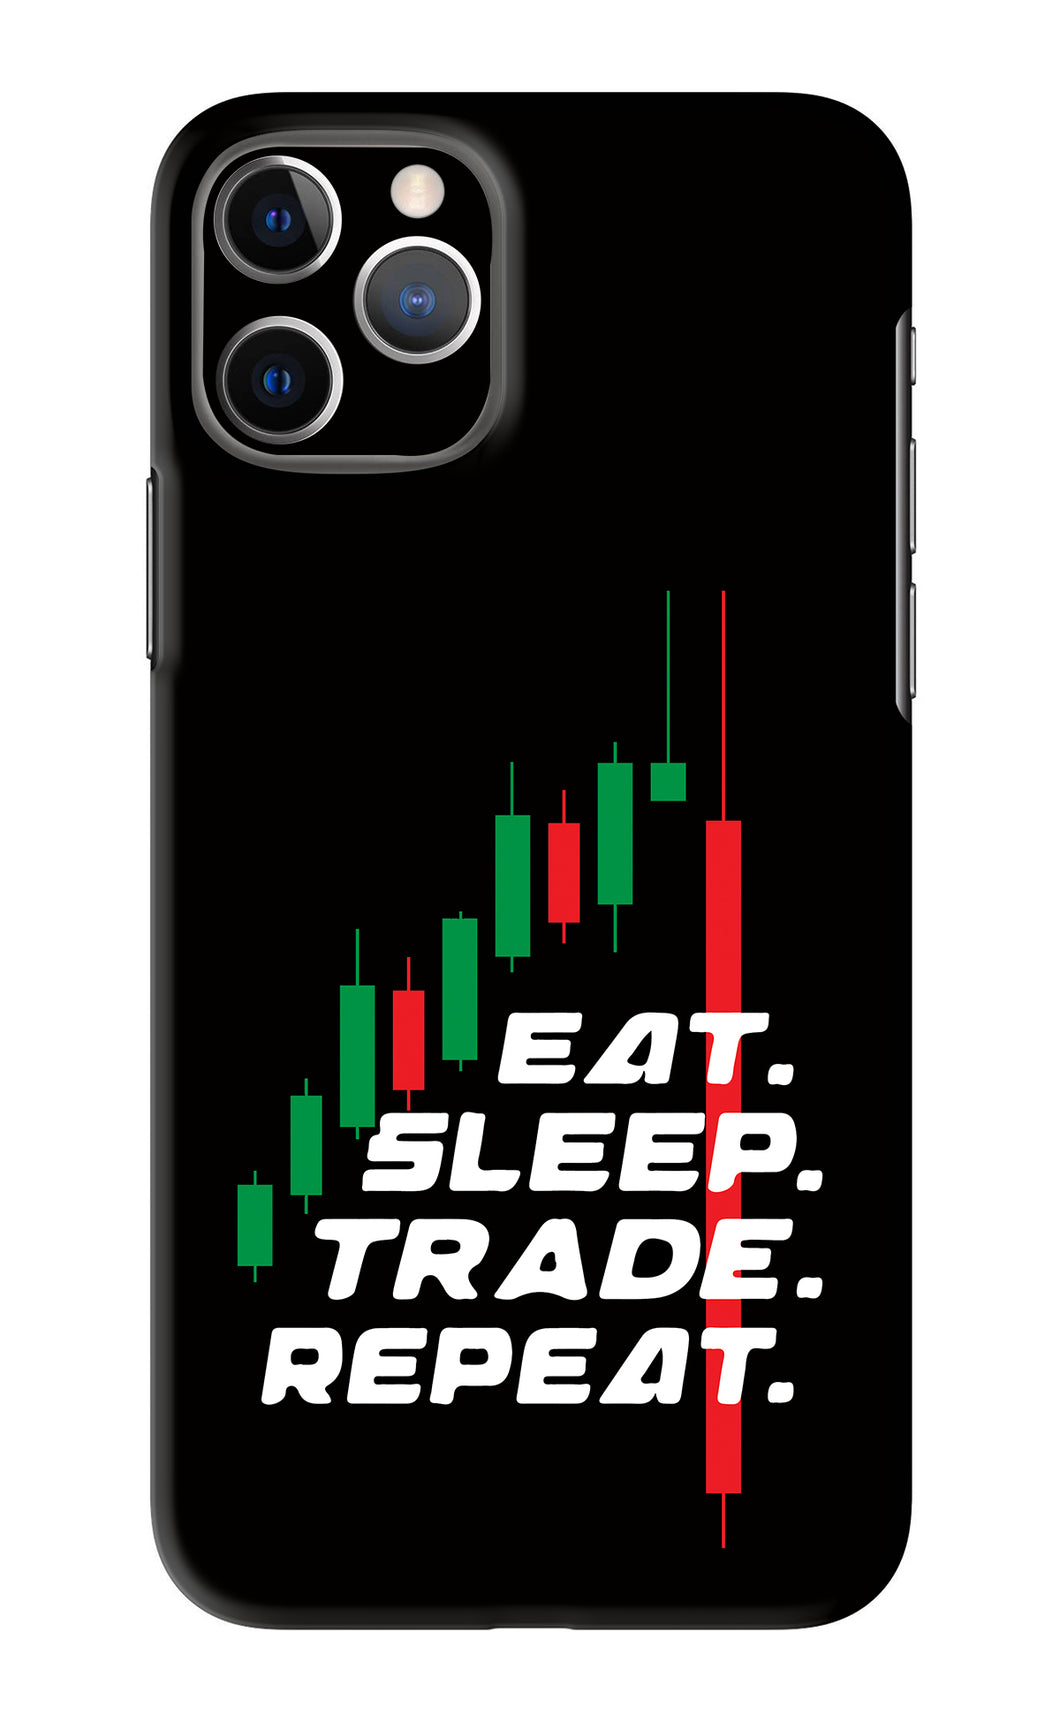 Eat Sleep Trade Repeat iPhone 11 Pro Back Skin Wrap